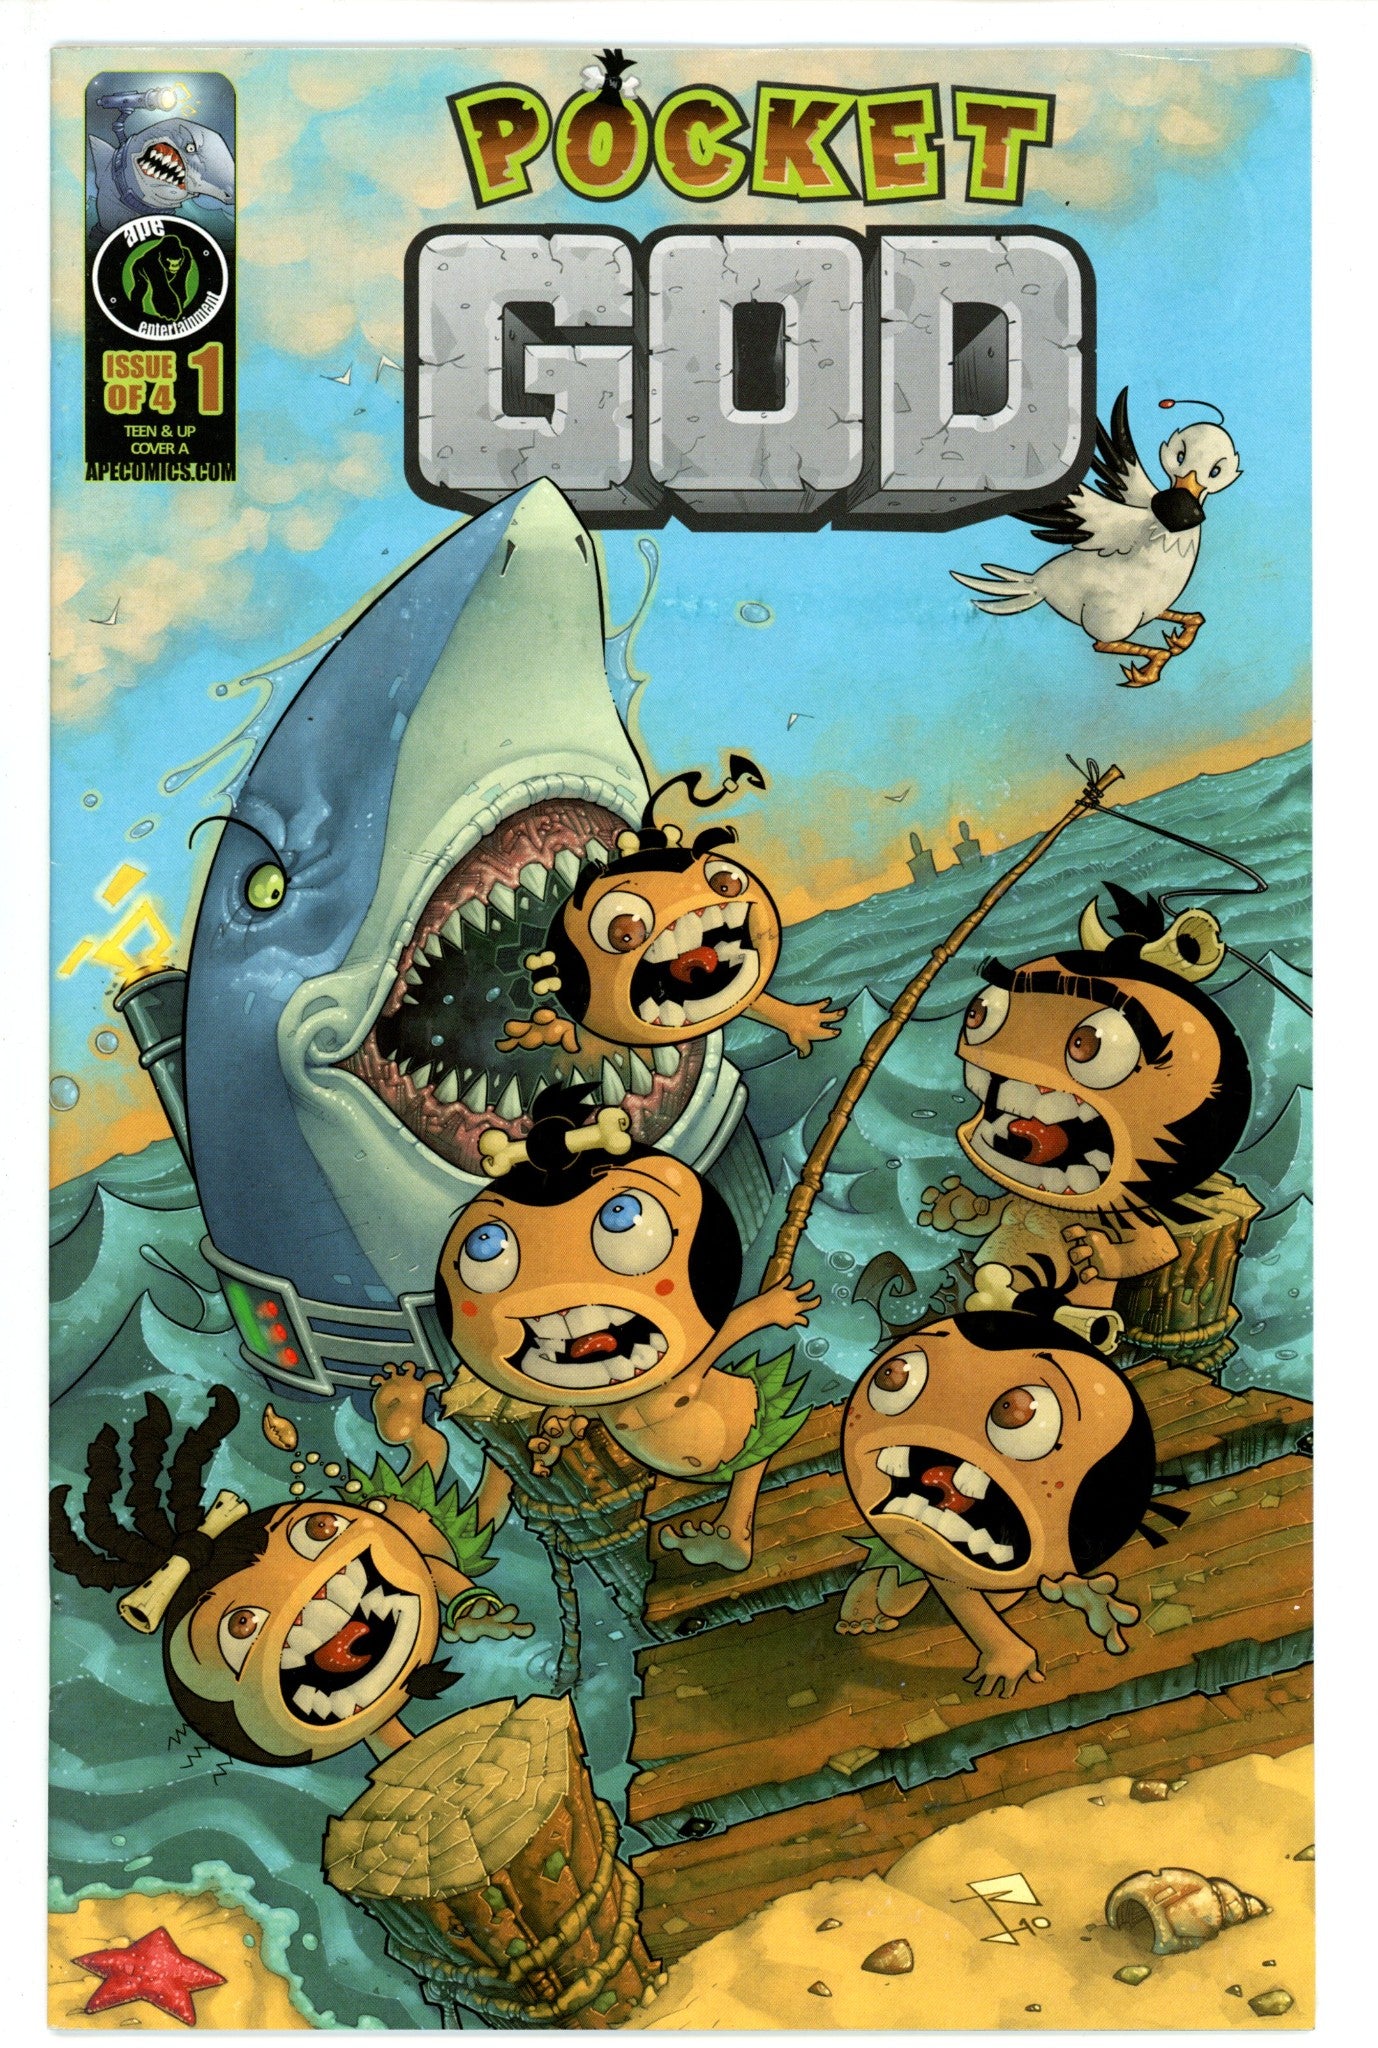 Pocket God Vol 1 1 (2010)